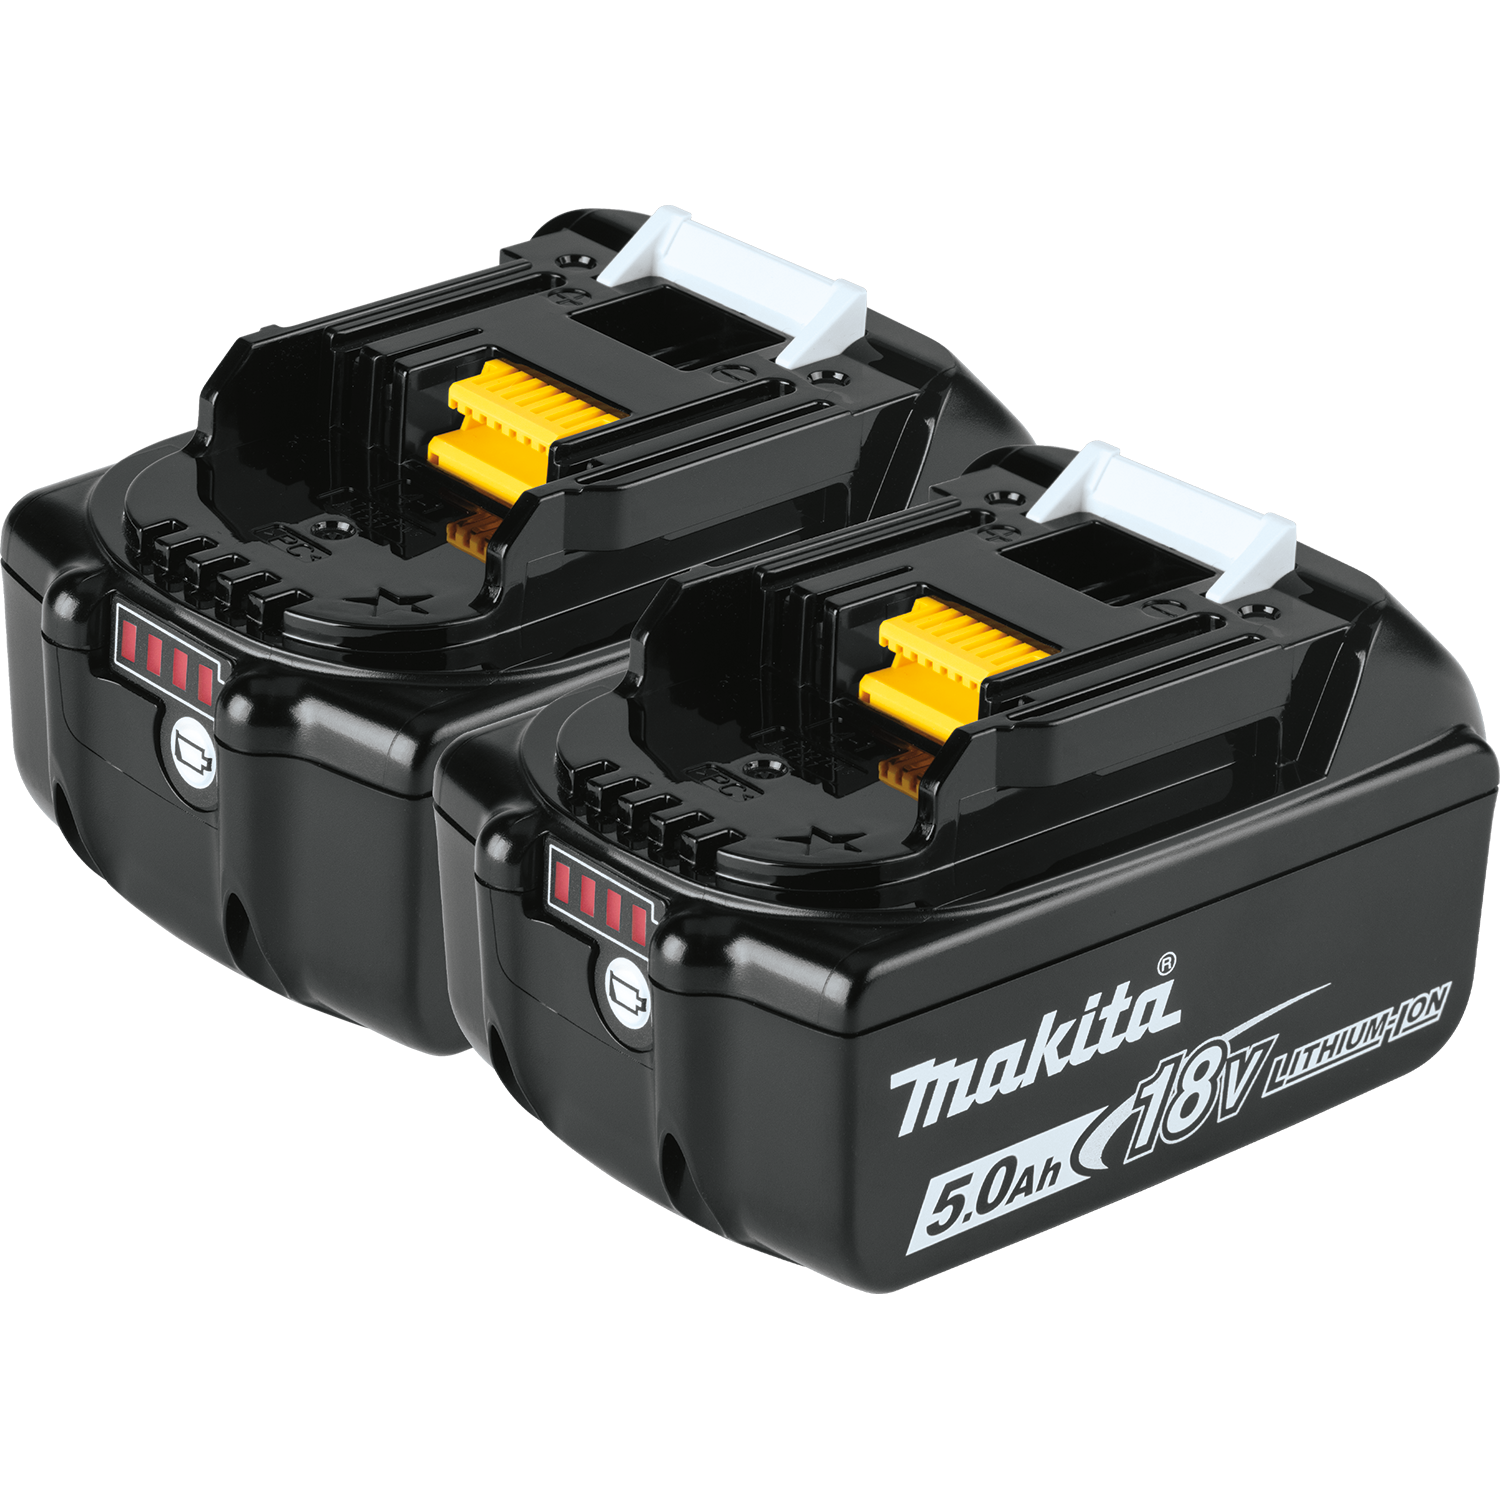 Makita 18V LXT 5.0Ah Battery Twin Pack - Denco Door Stuff